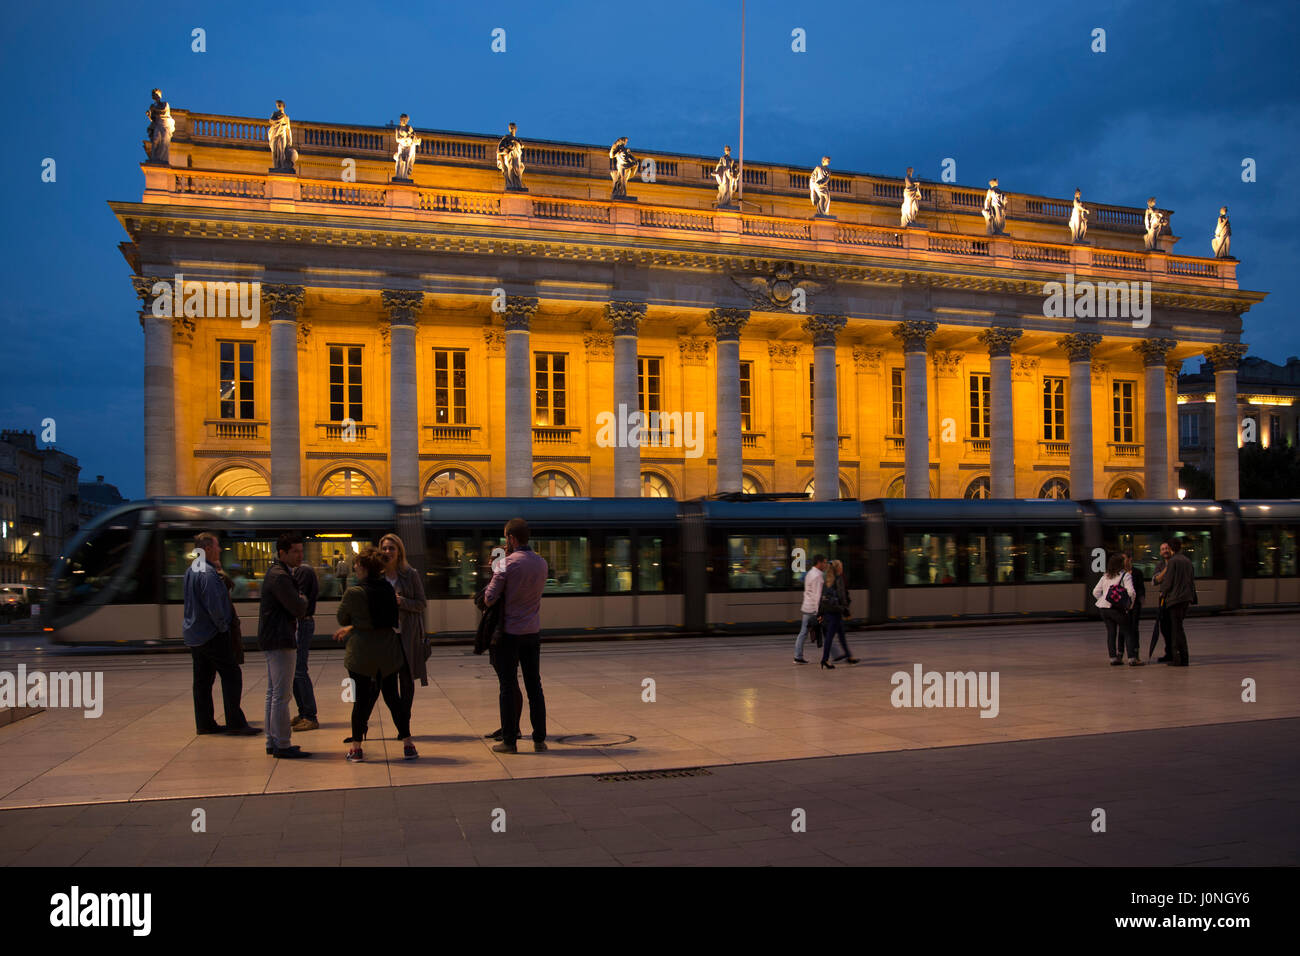 Menschen und Straßenbahn von Grand Theatre - Opera National de Bordeaux, Place De La Comedie, Bordeaux, Frankreich Stockfoto